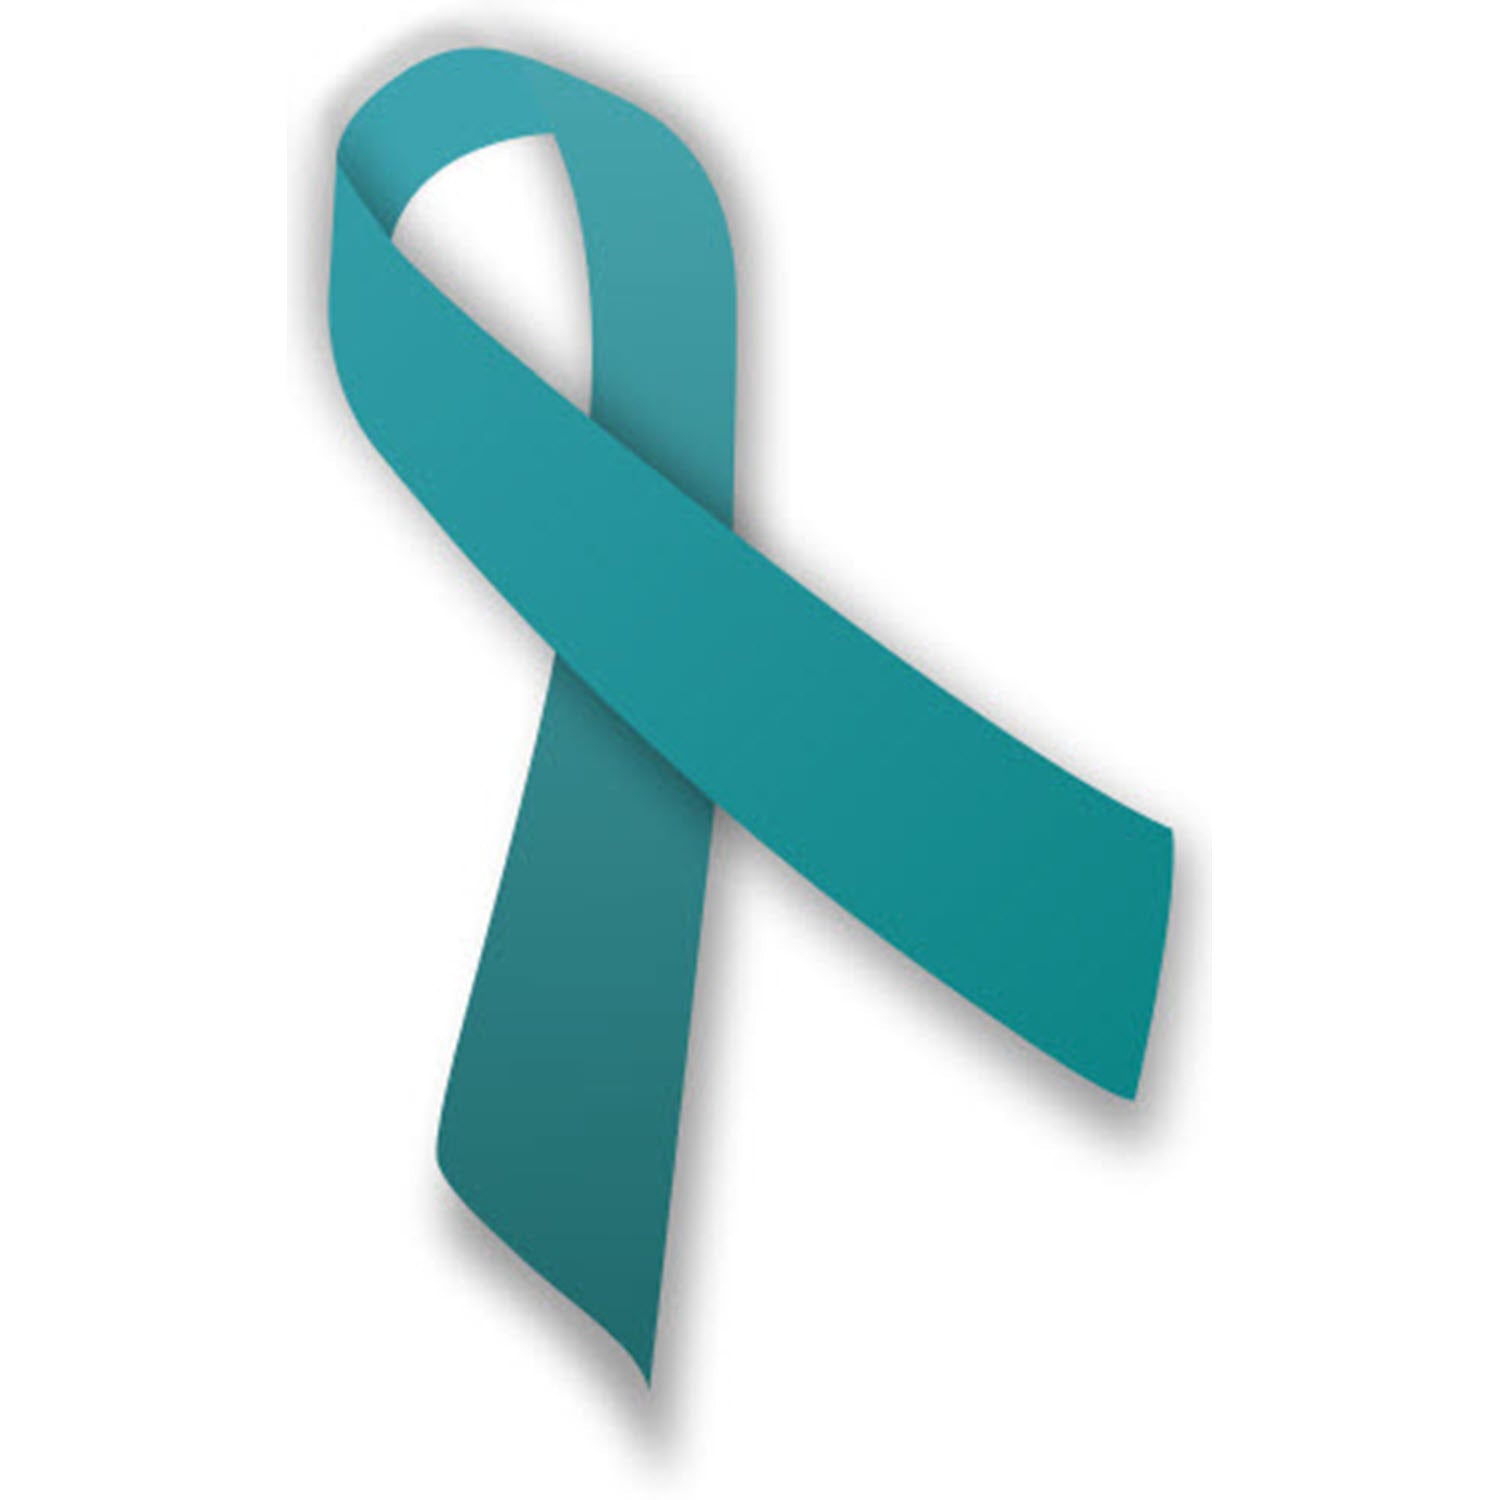 Ovarian Cancer Fundraising